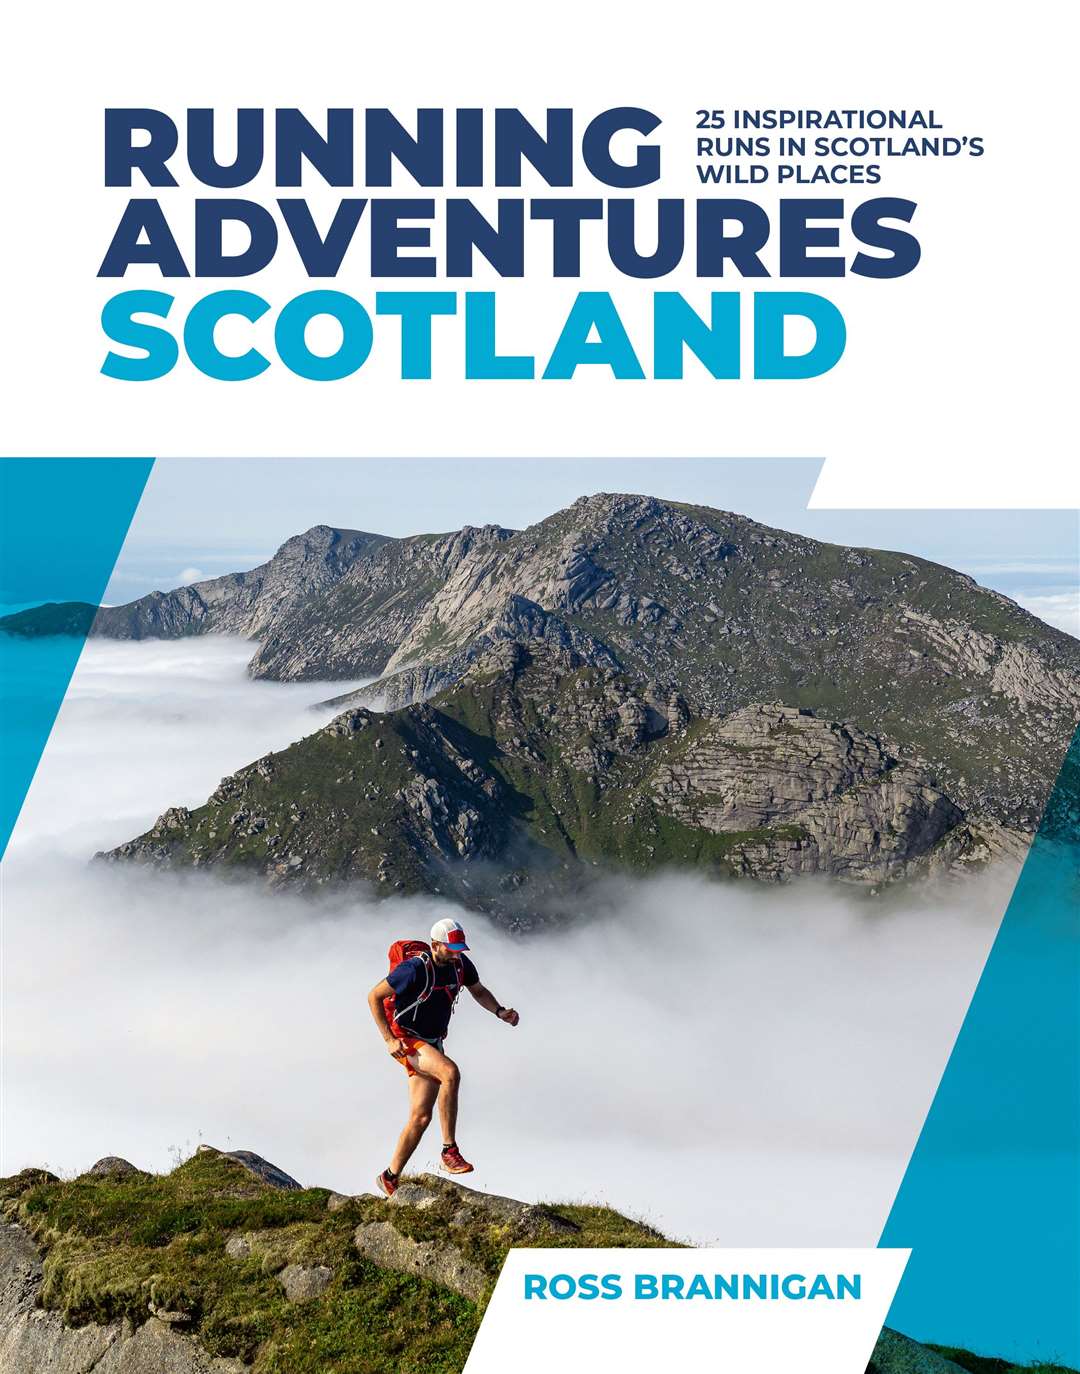 Running Adventures Scotland cover.